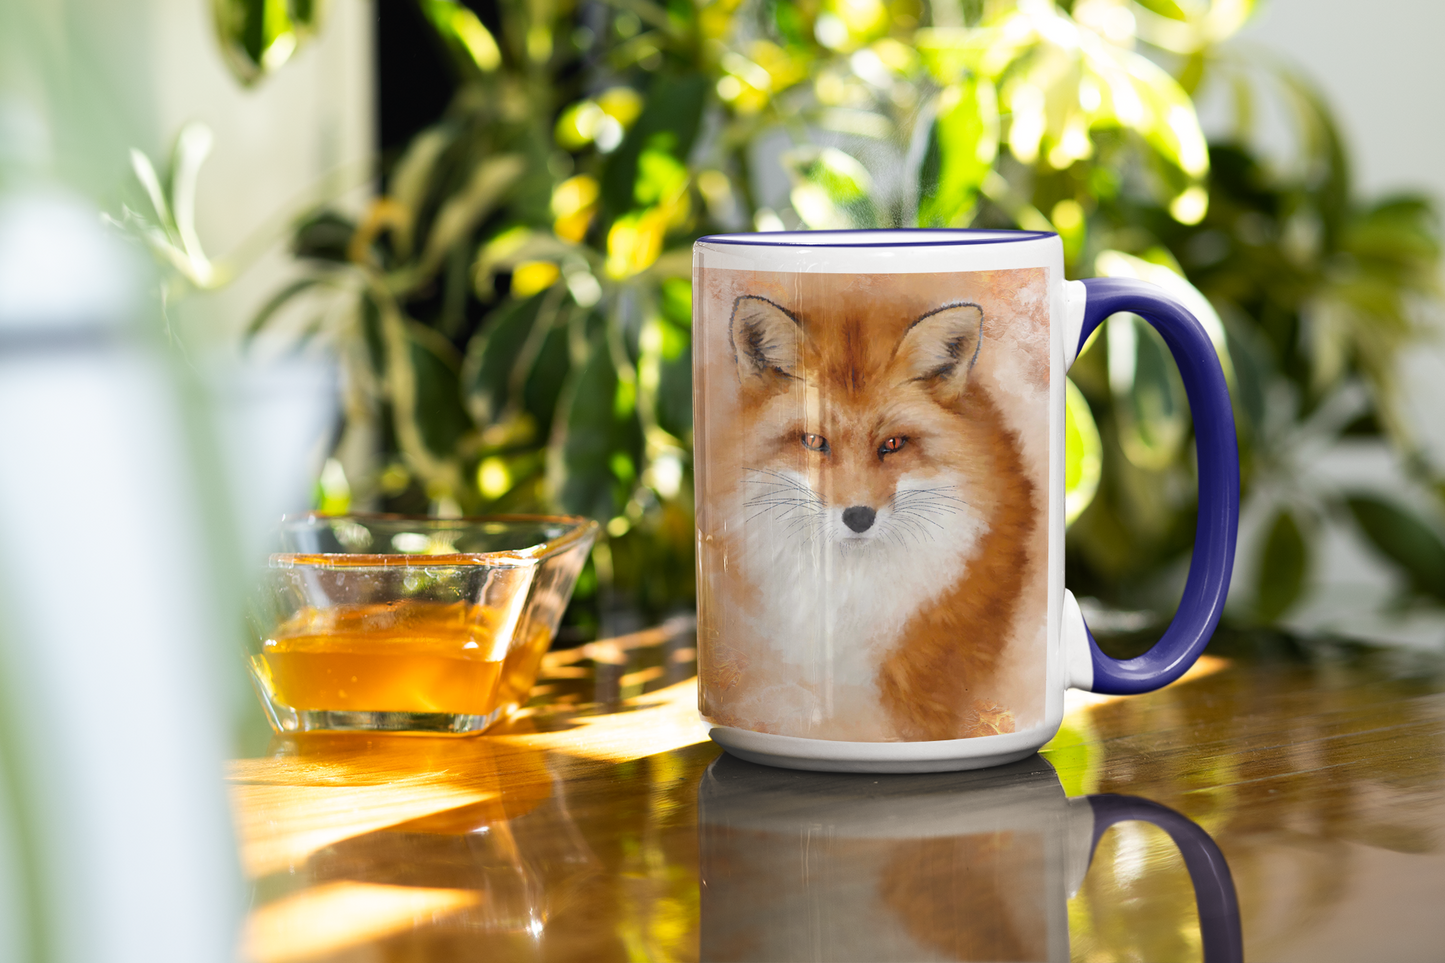 British Wildlife Art Fox Personalised Ceramic Mug with Coordinating Colour Gift Idea